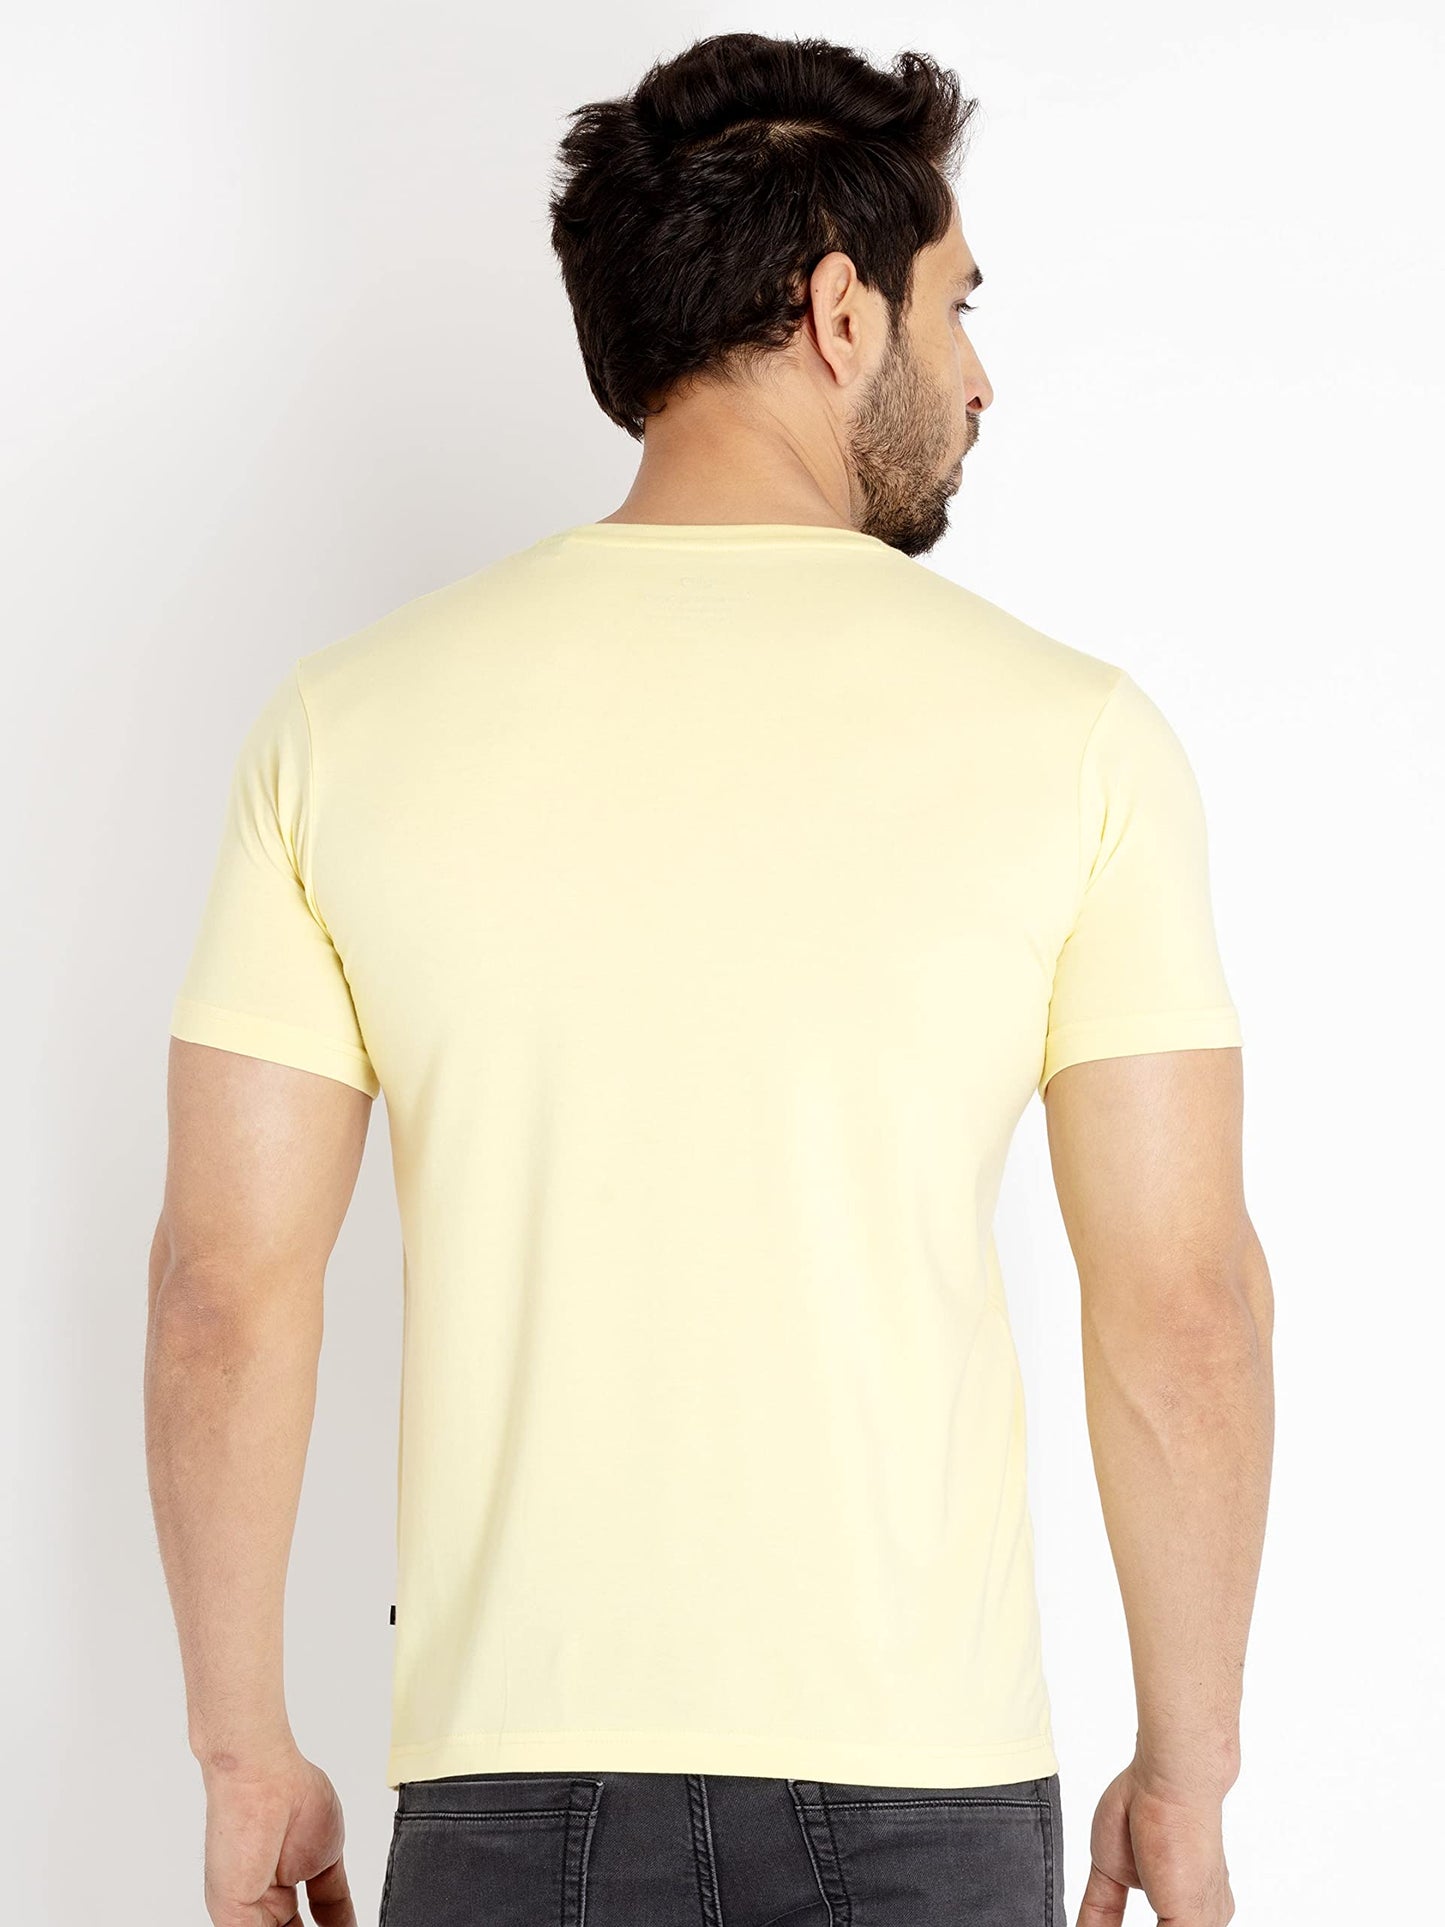 Status Quo Men's Cotton Printed Round Neck T-Shirt | Lemon | M | SQ-RN-23144-LEMON-M |